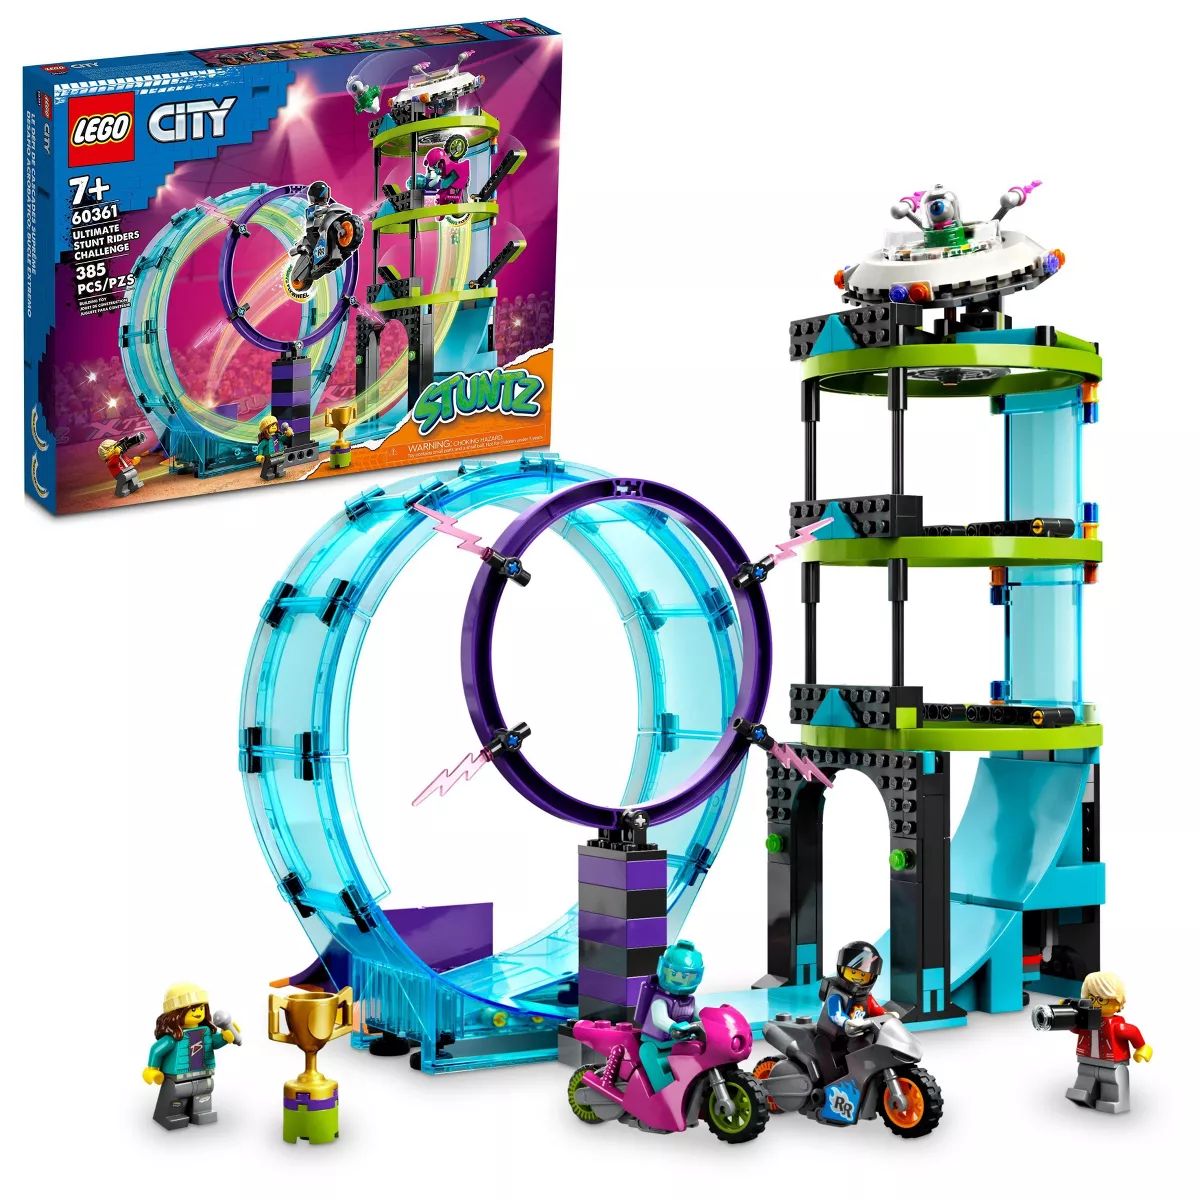 LEGO City Stuntz Ultimate Stunt Riders Challenge Set 60361 | Target